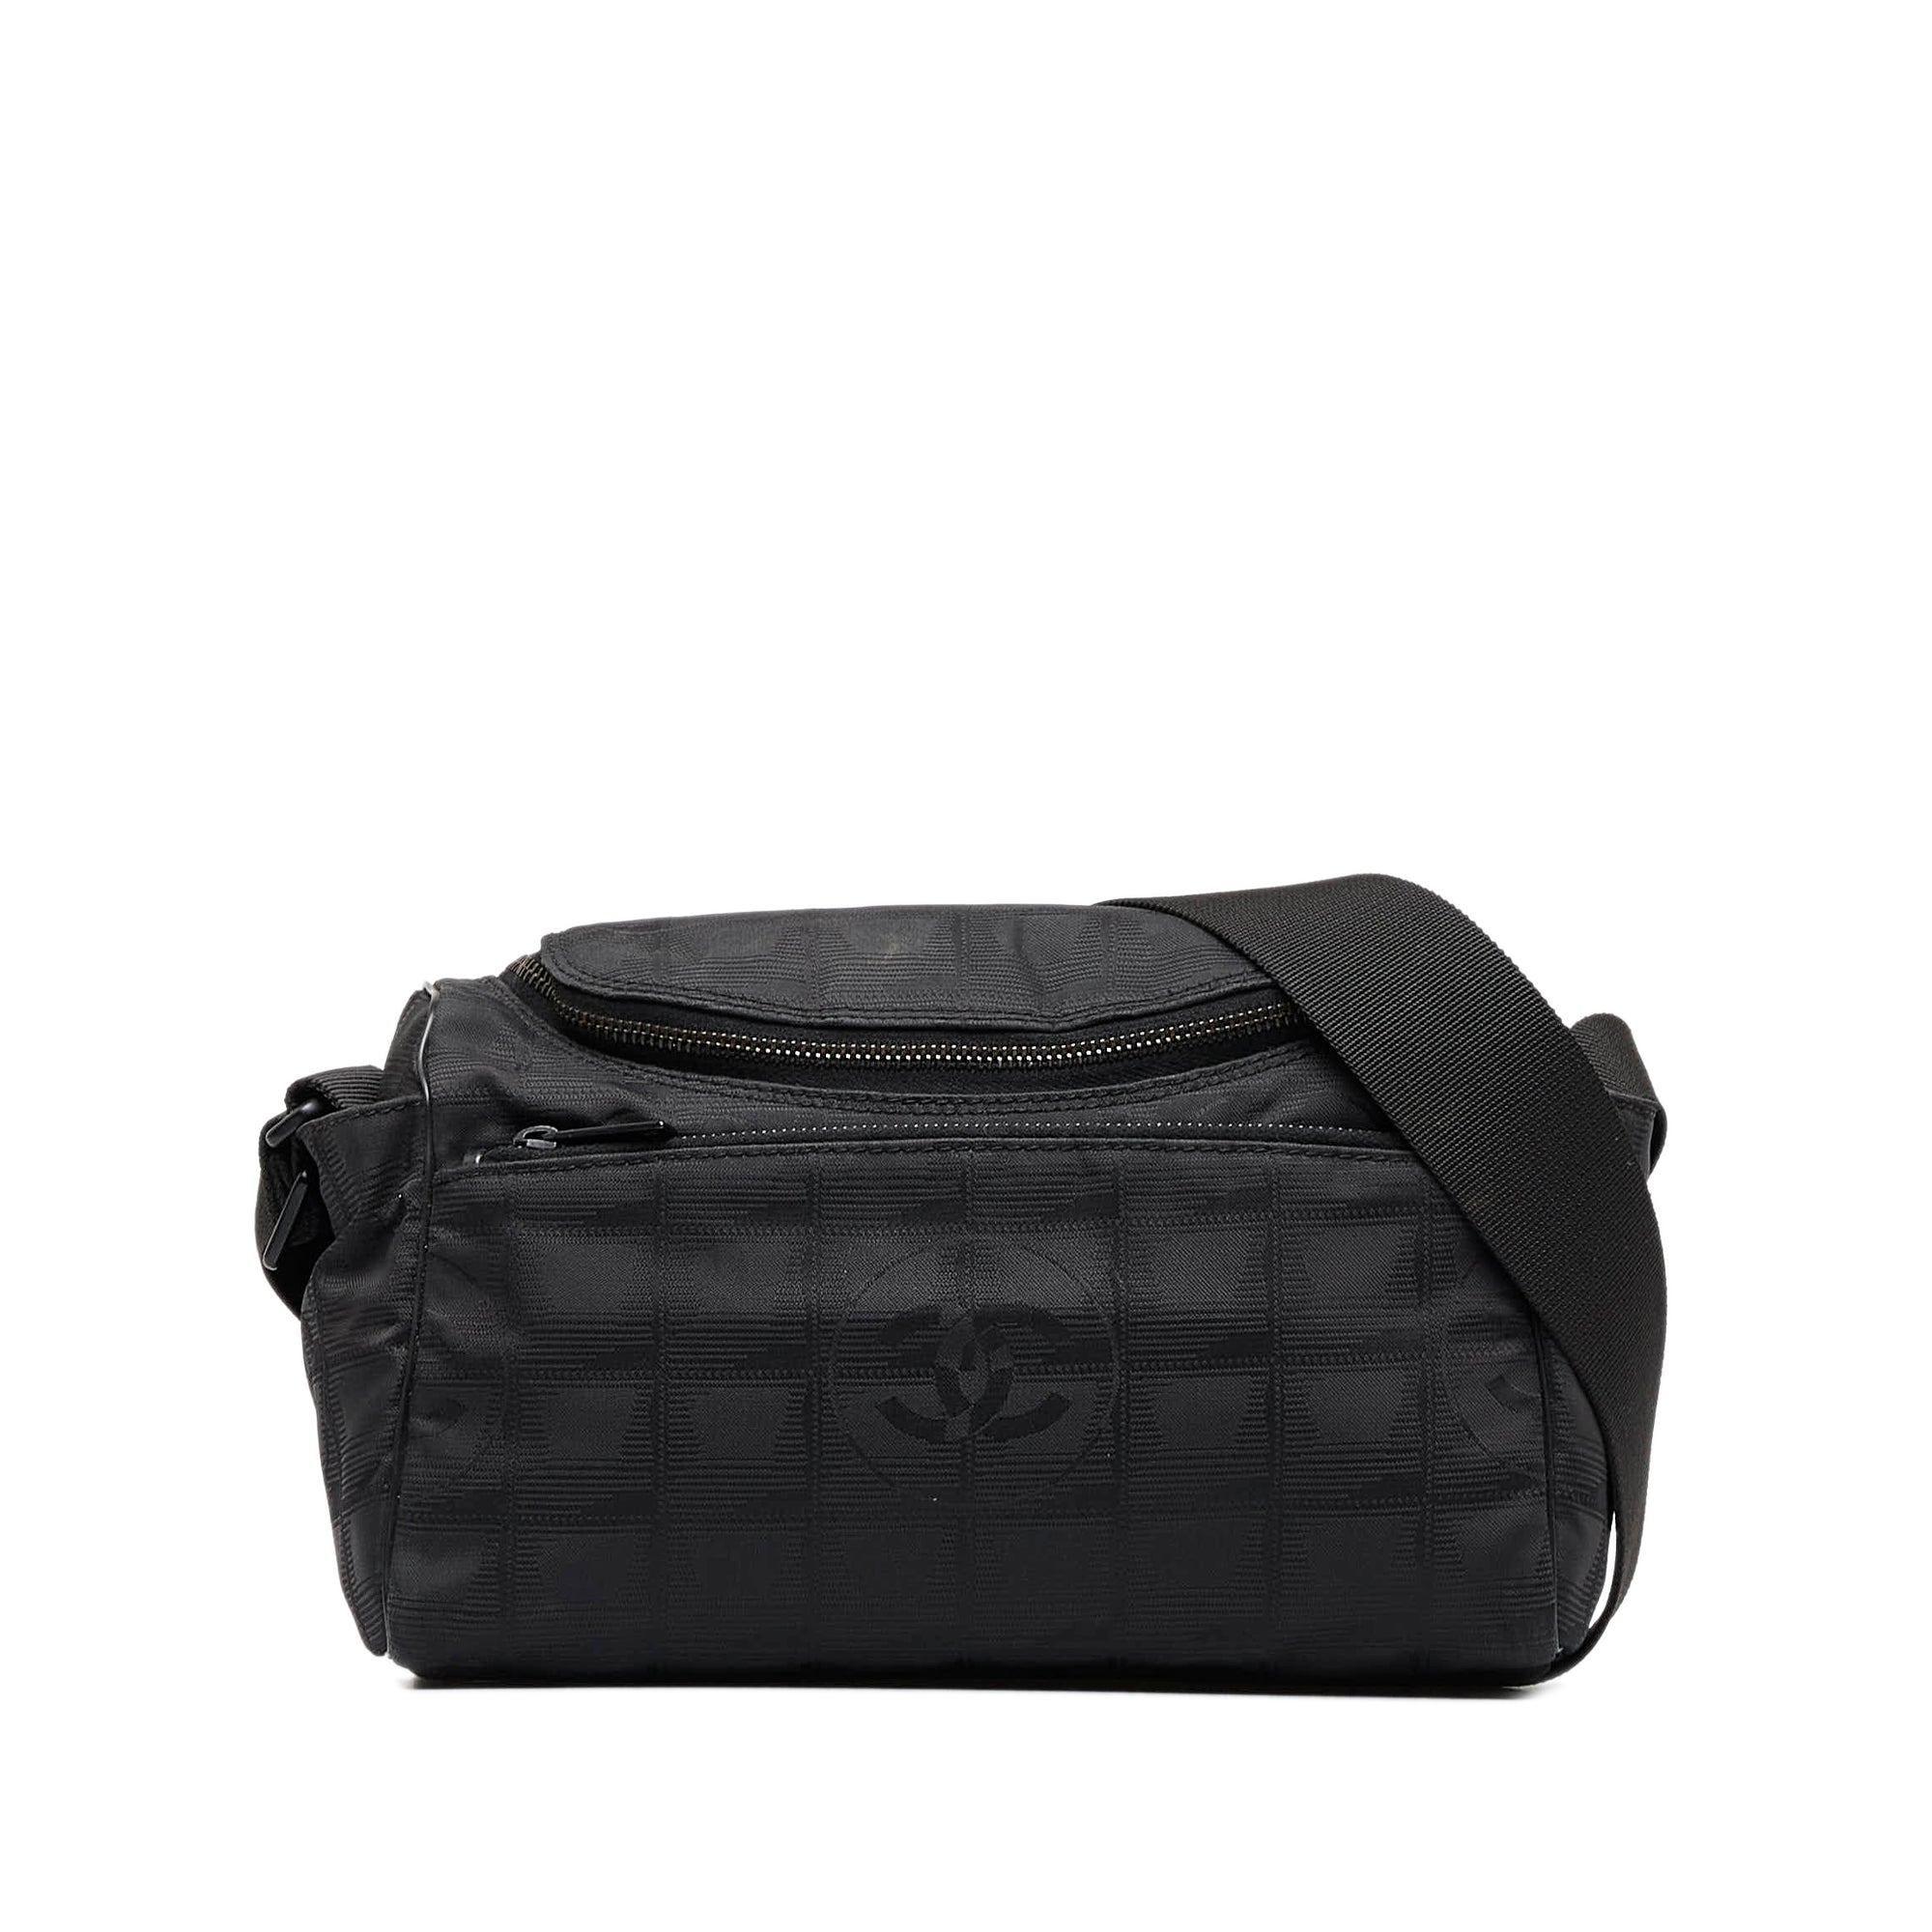 Chanel Black Nylon Travel Line Briefcase